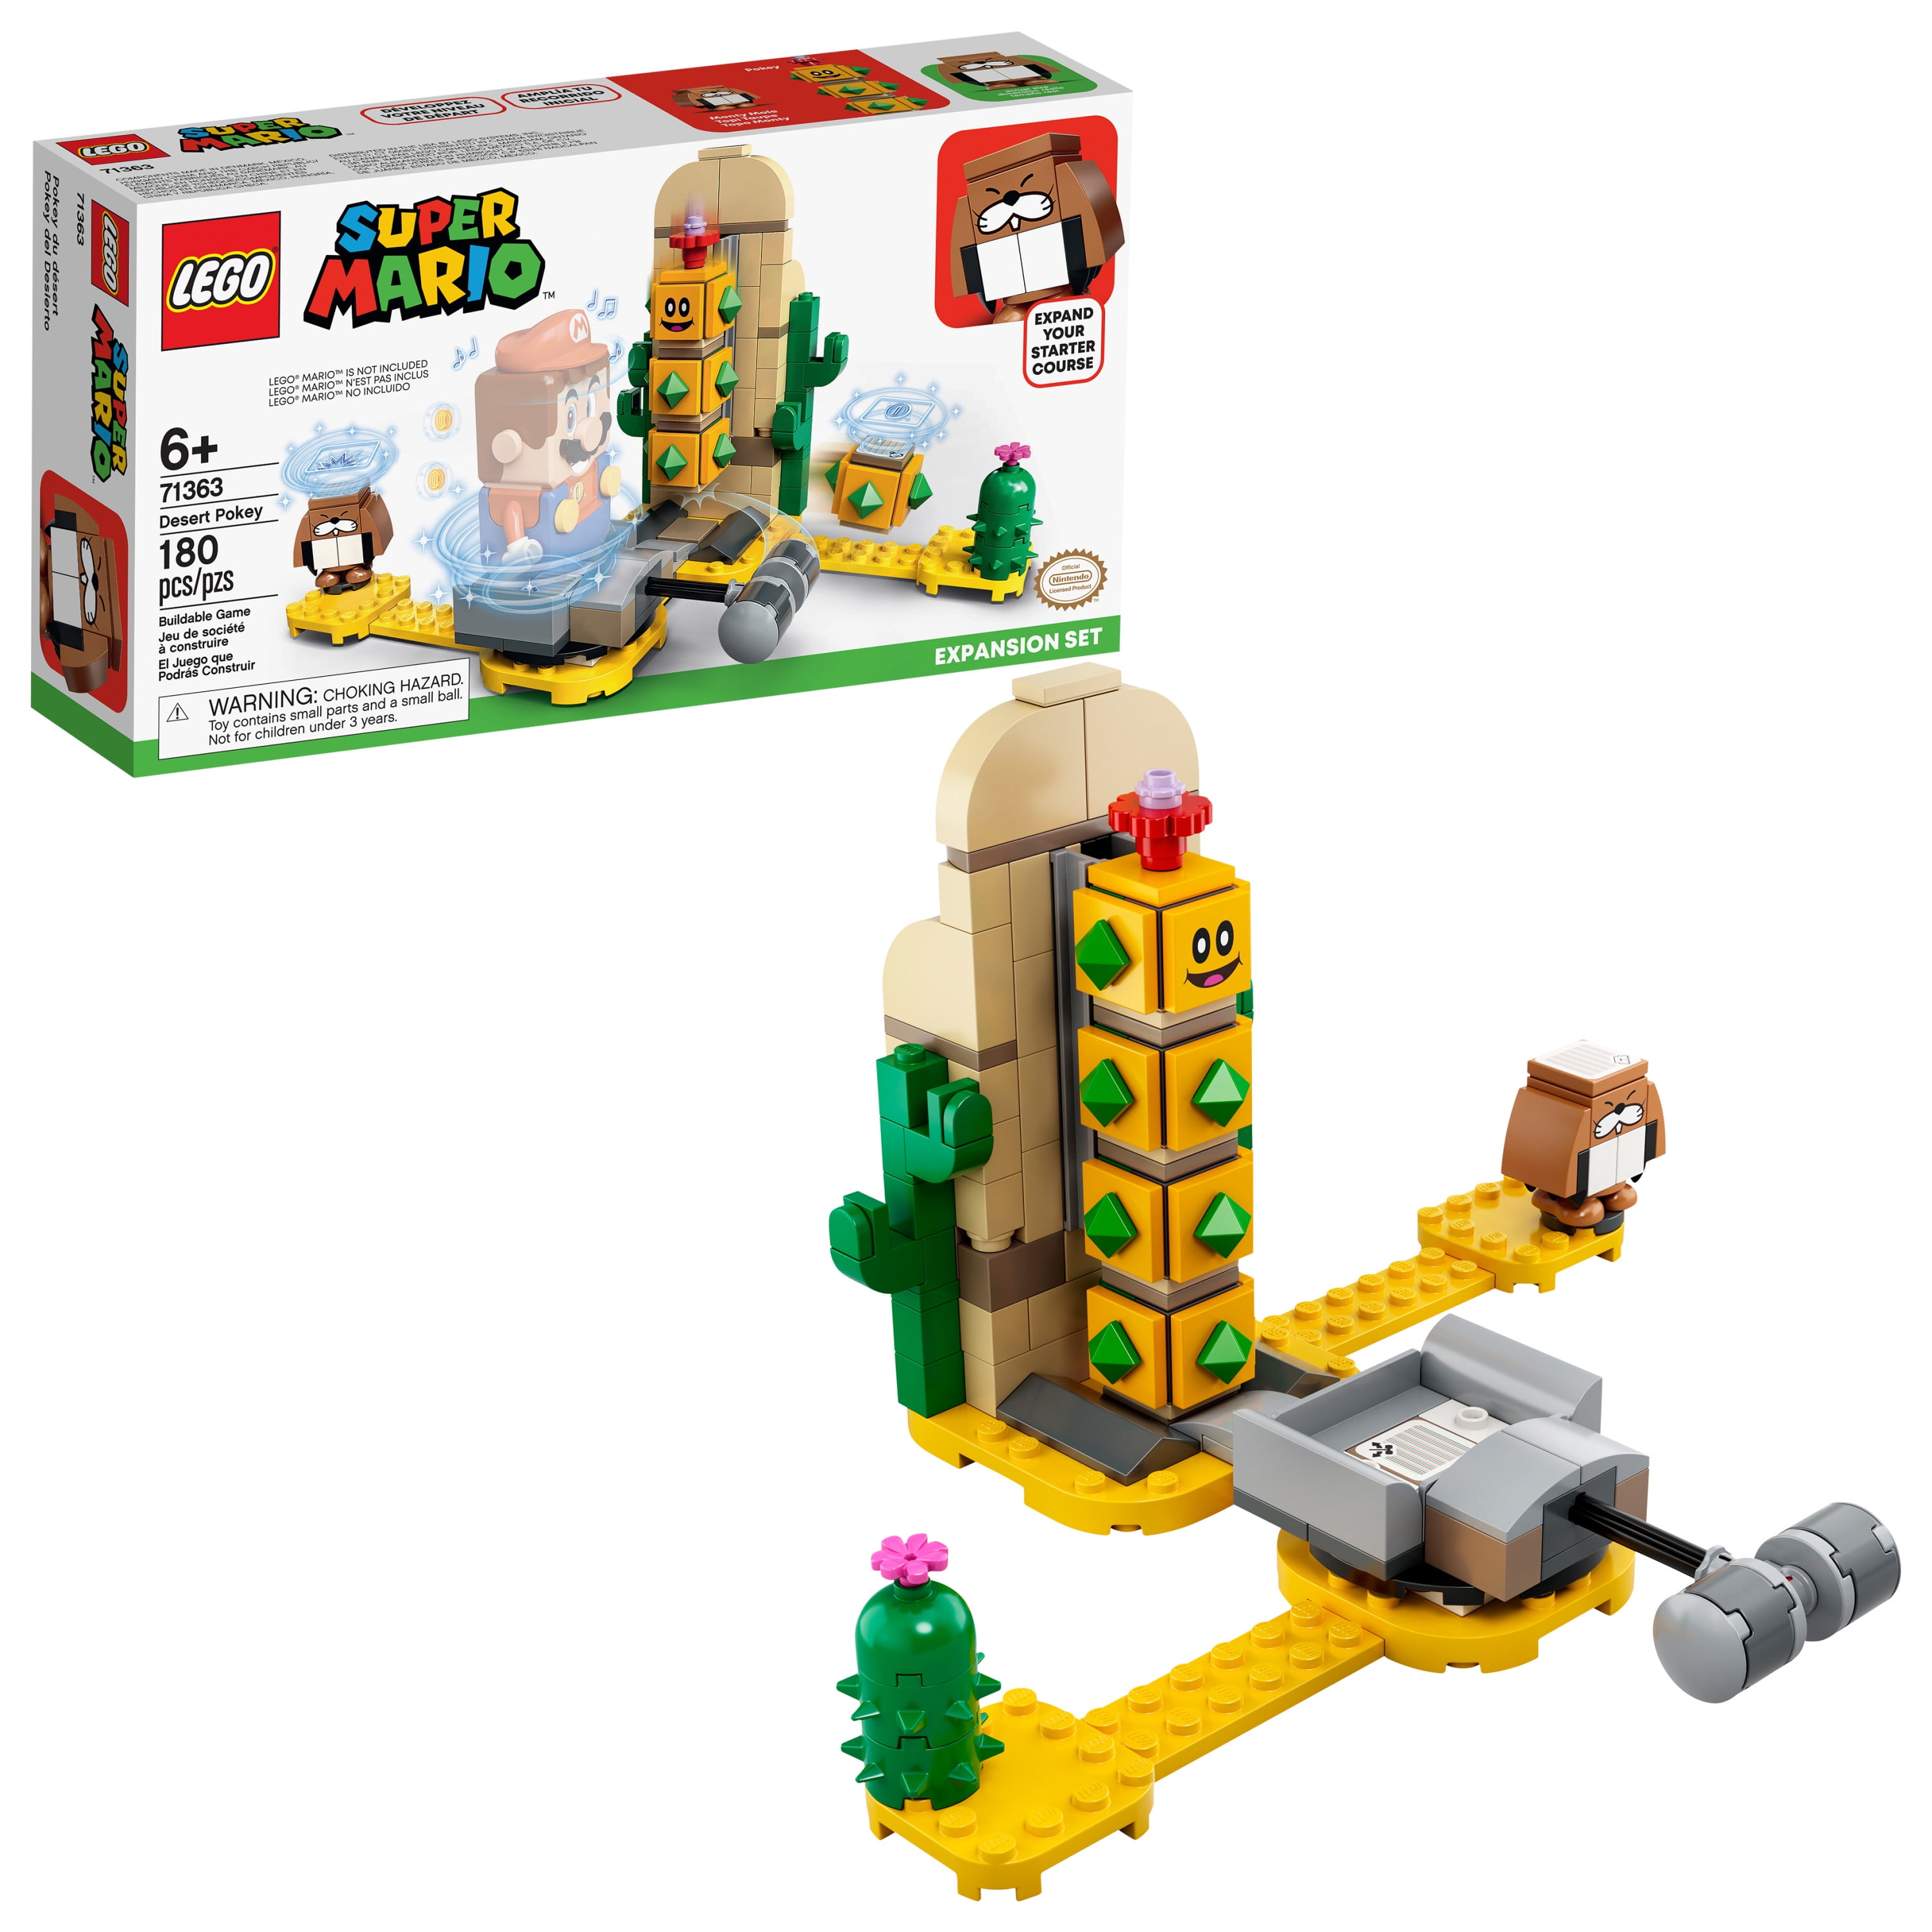 LEGO Super Mario Adventures with Mario Starter Course 71360 Building Kit In Hand 